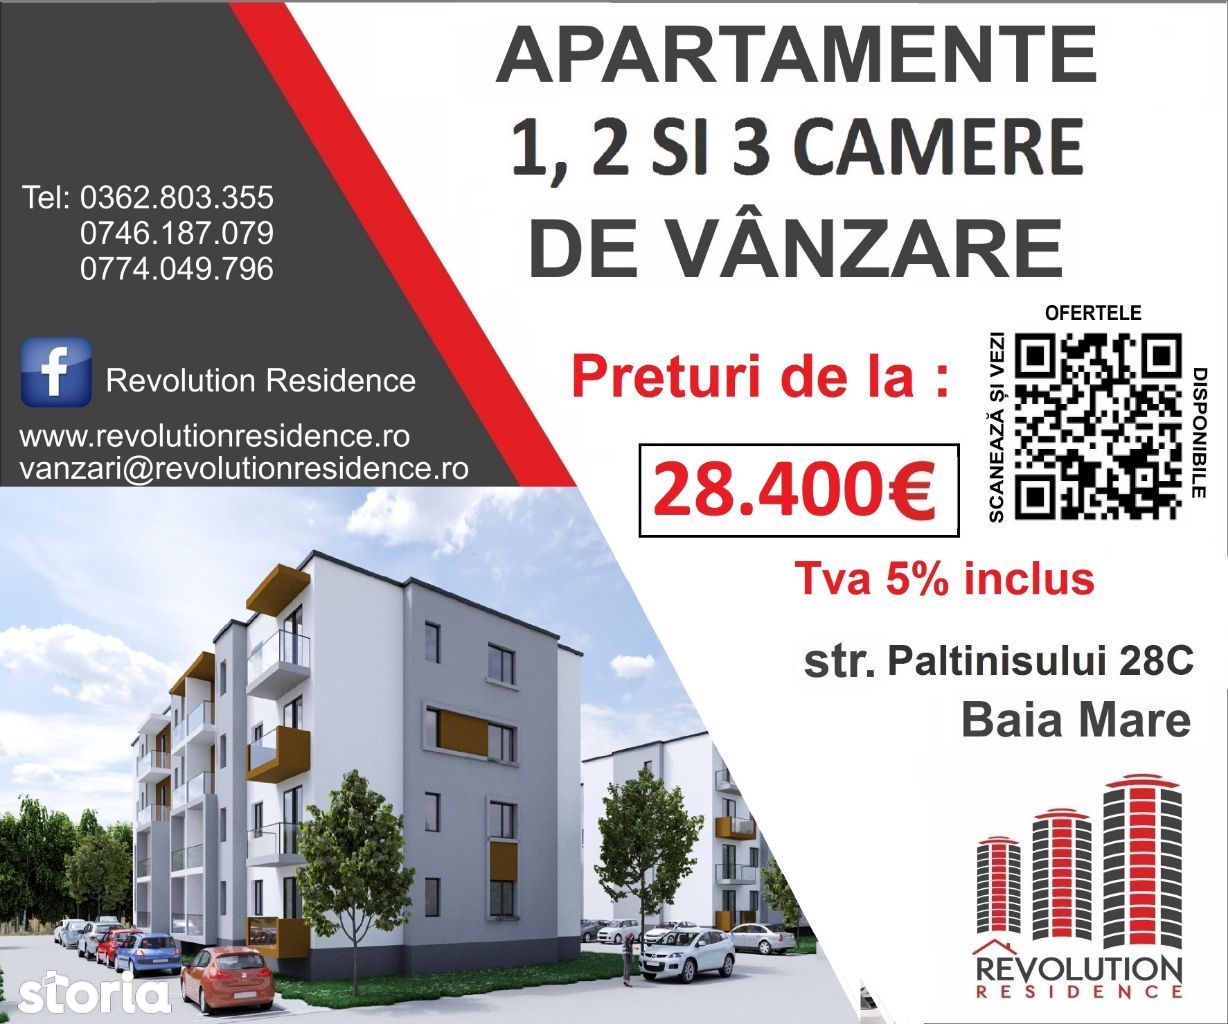 COMISION 0% - Apartamente 1,2 si 3camere - Paltinisului 28C, Baia Mare